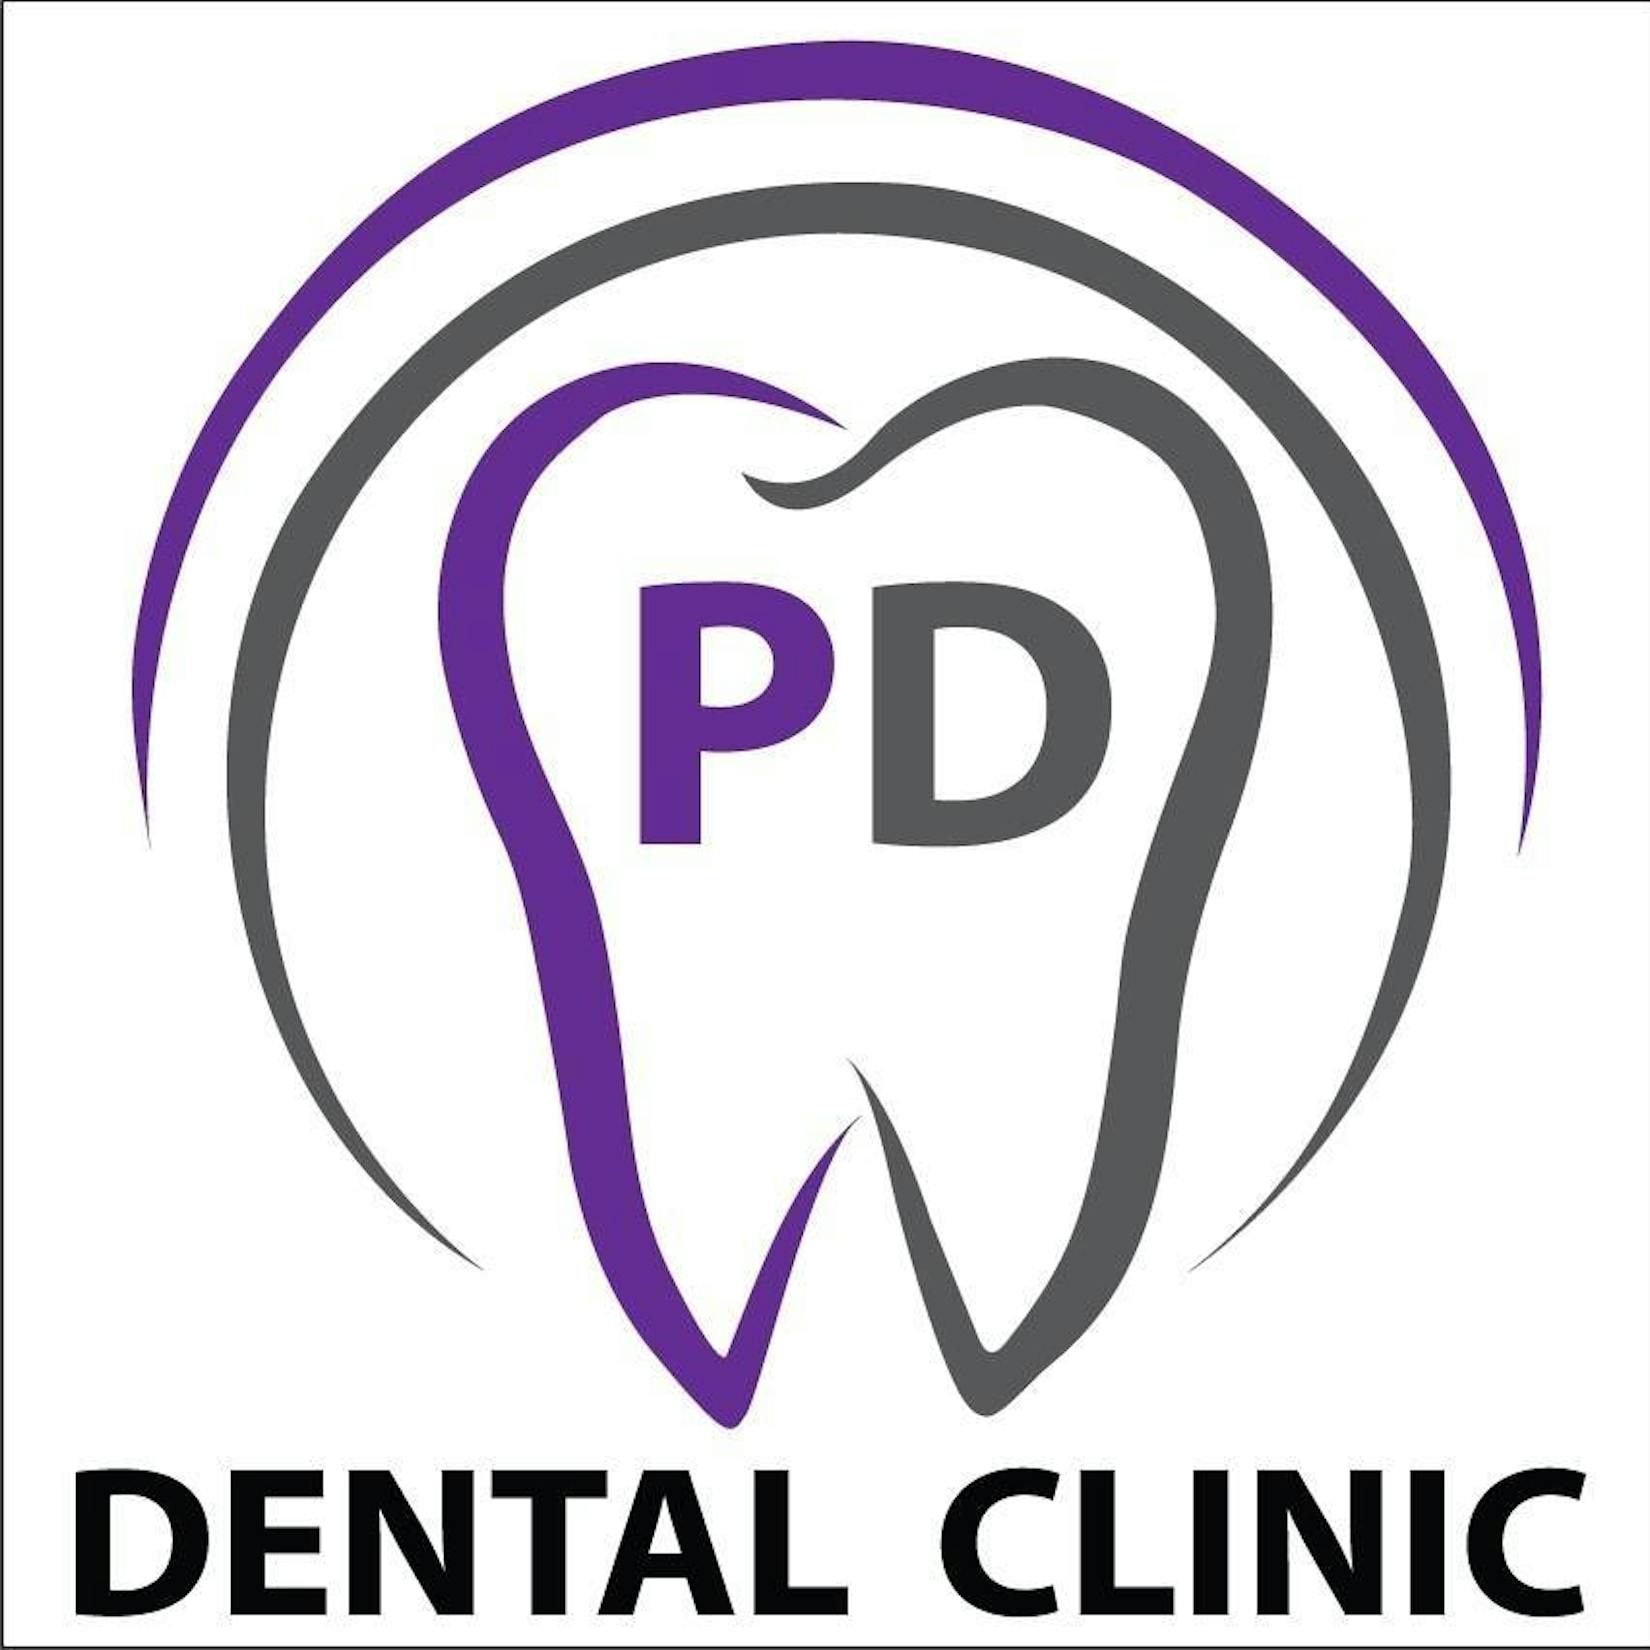 PD Dental Clinic | Medical